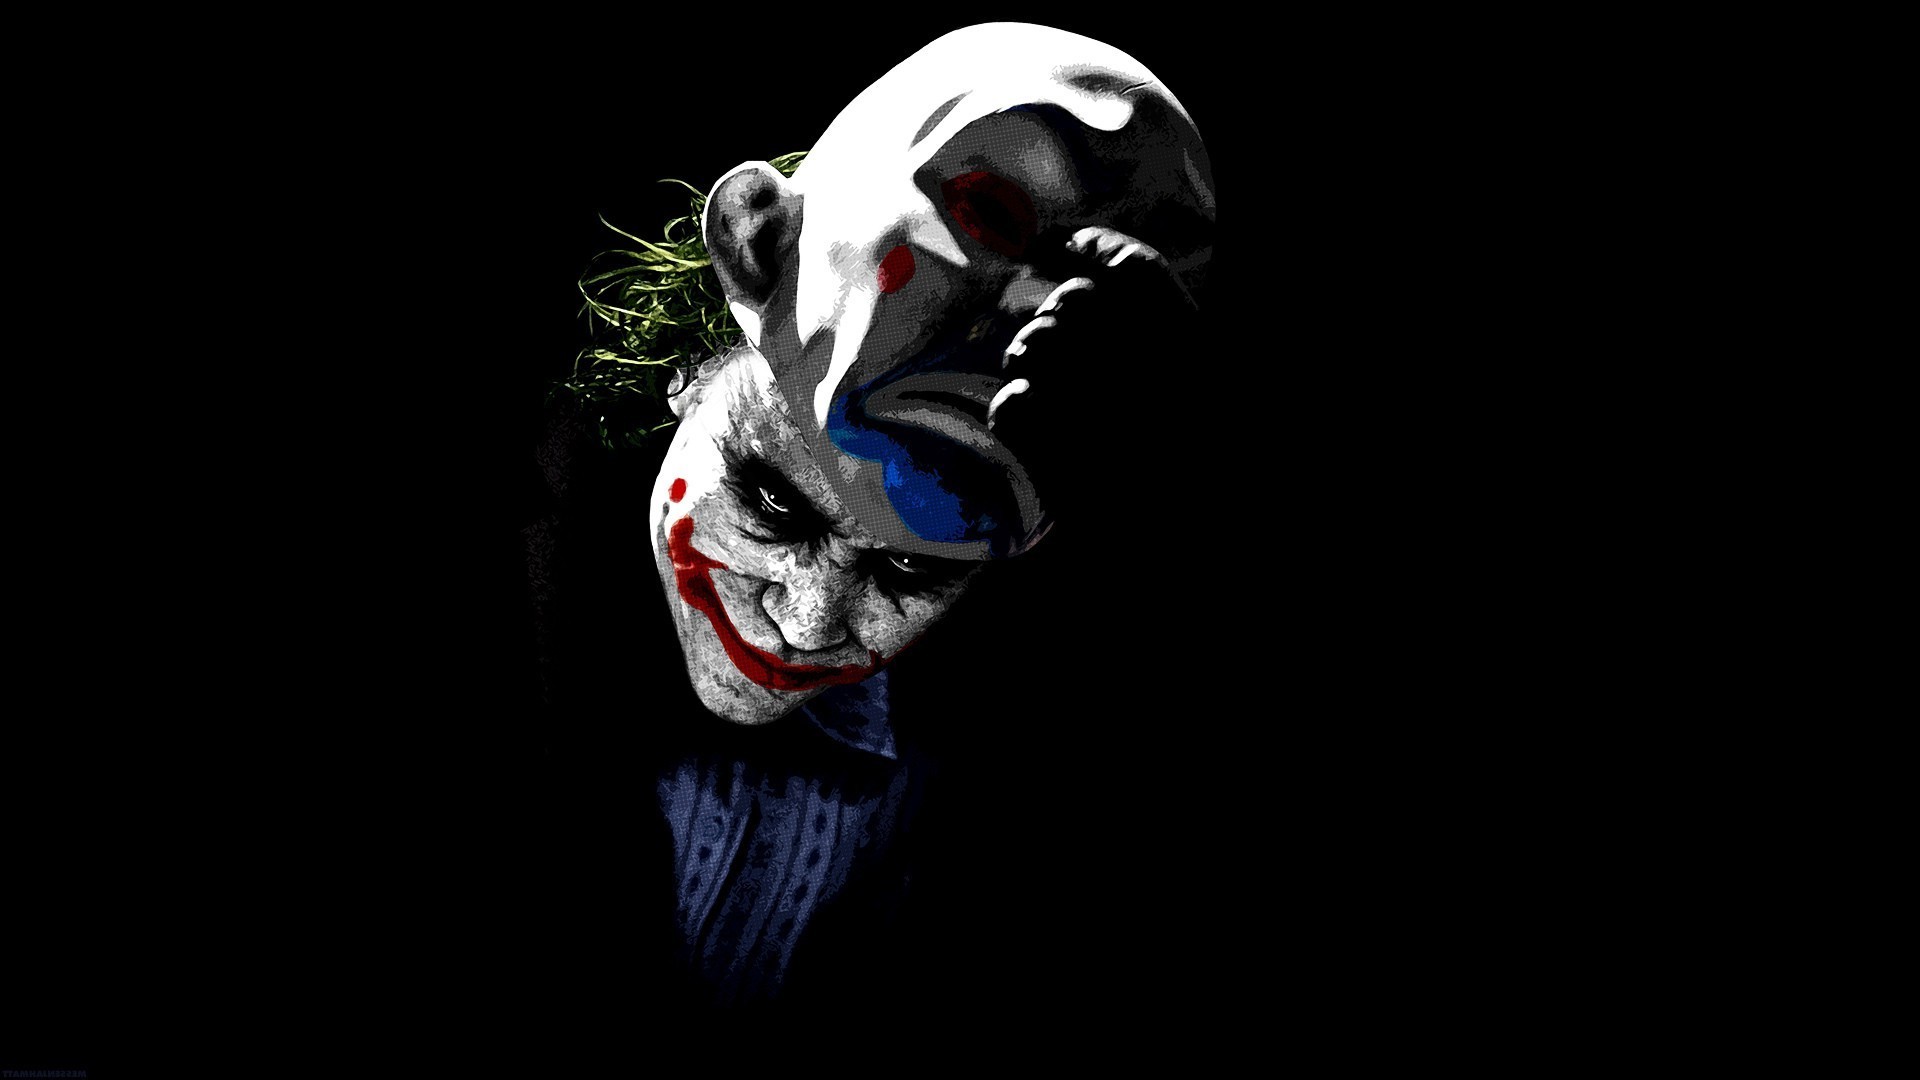 Joker Batman The Dark Knight Wallpapers Hd Desktop And Mobile Backgrounds